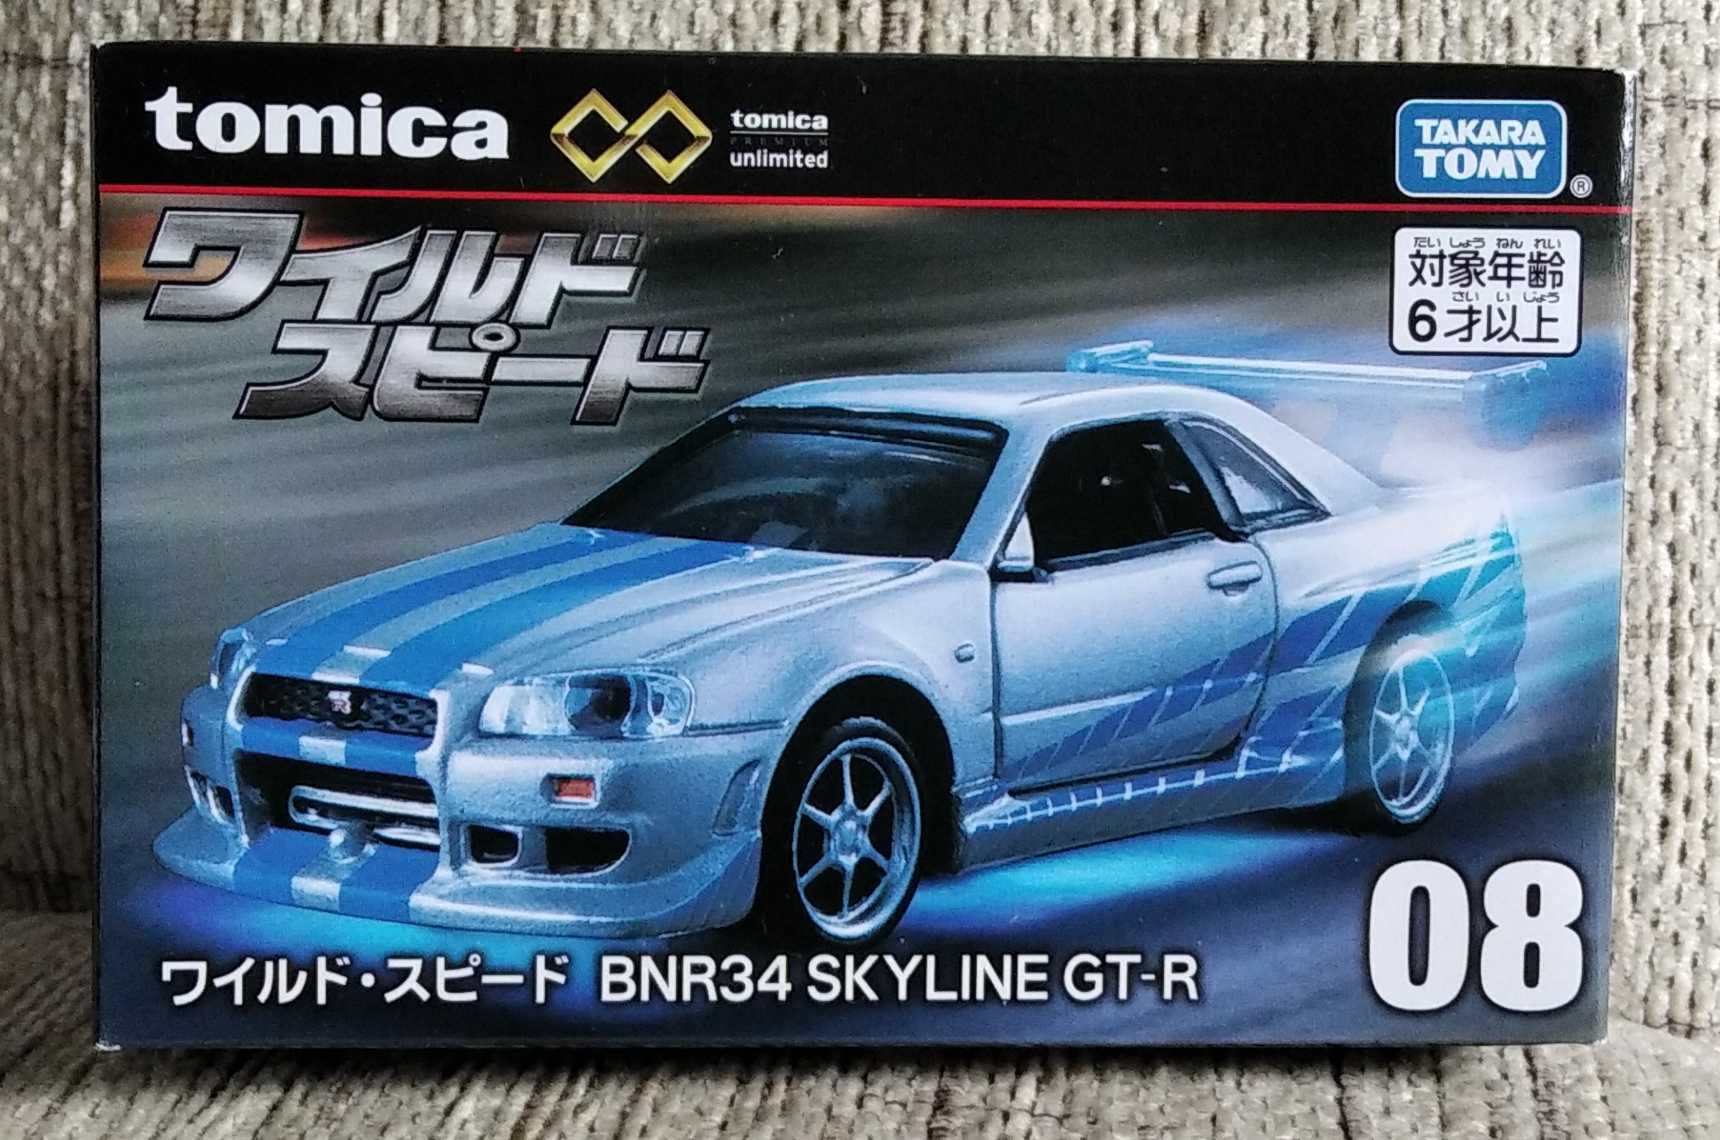 Tomica Premium Unlimited #08 Fast & Furious - Nissan Skyline GTR R34